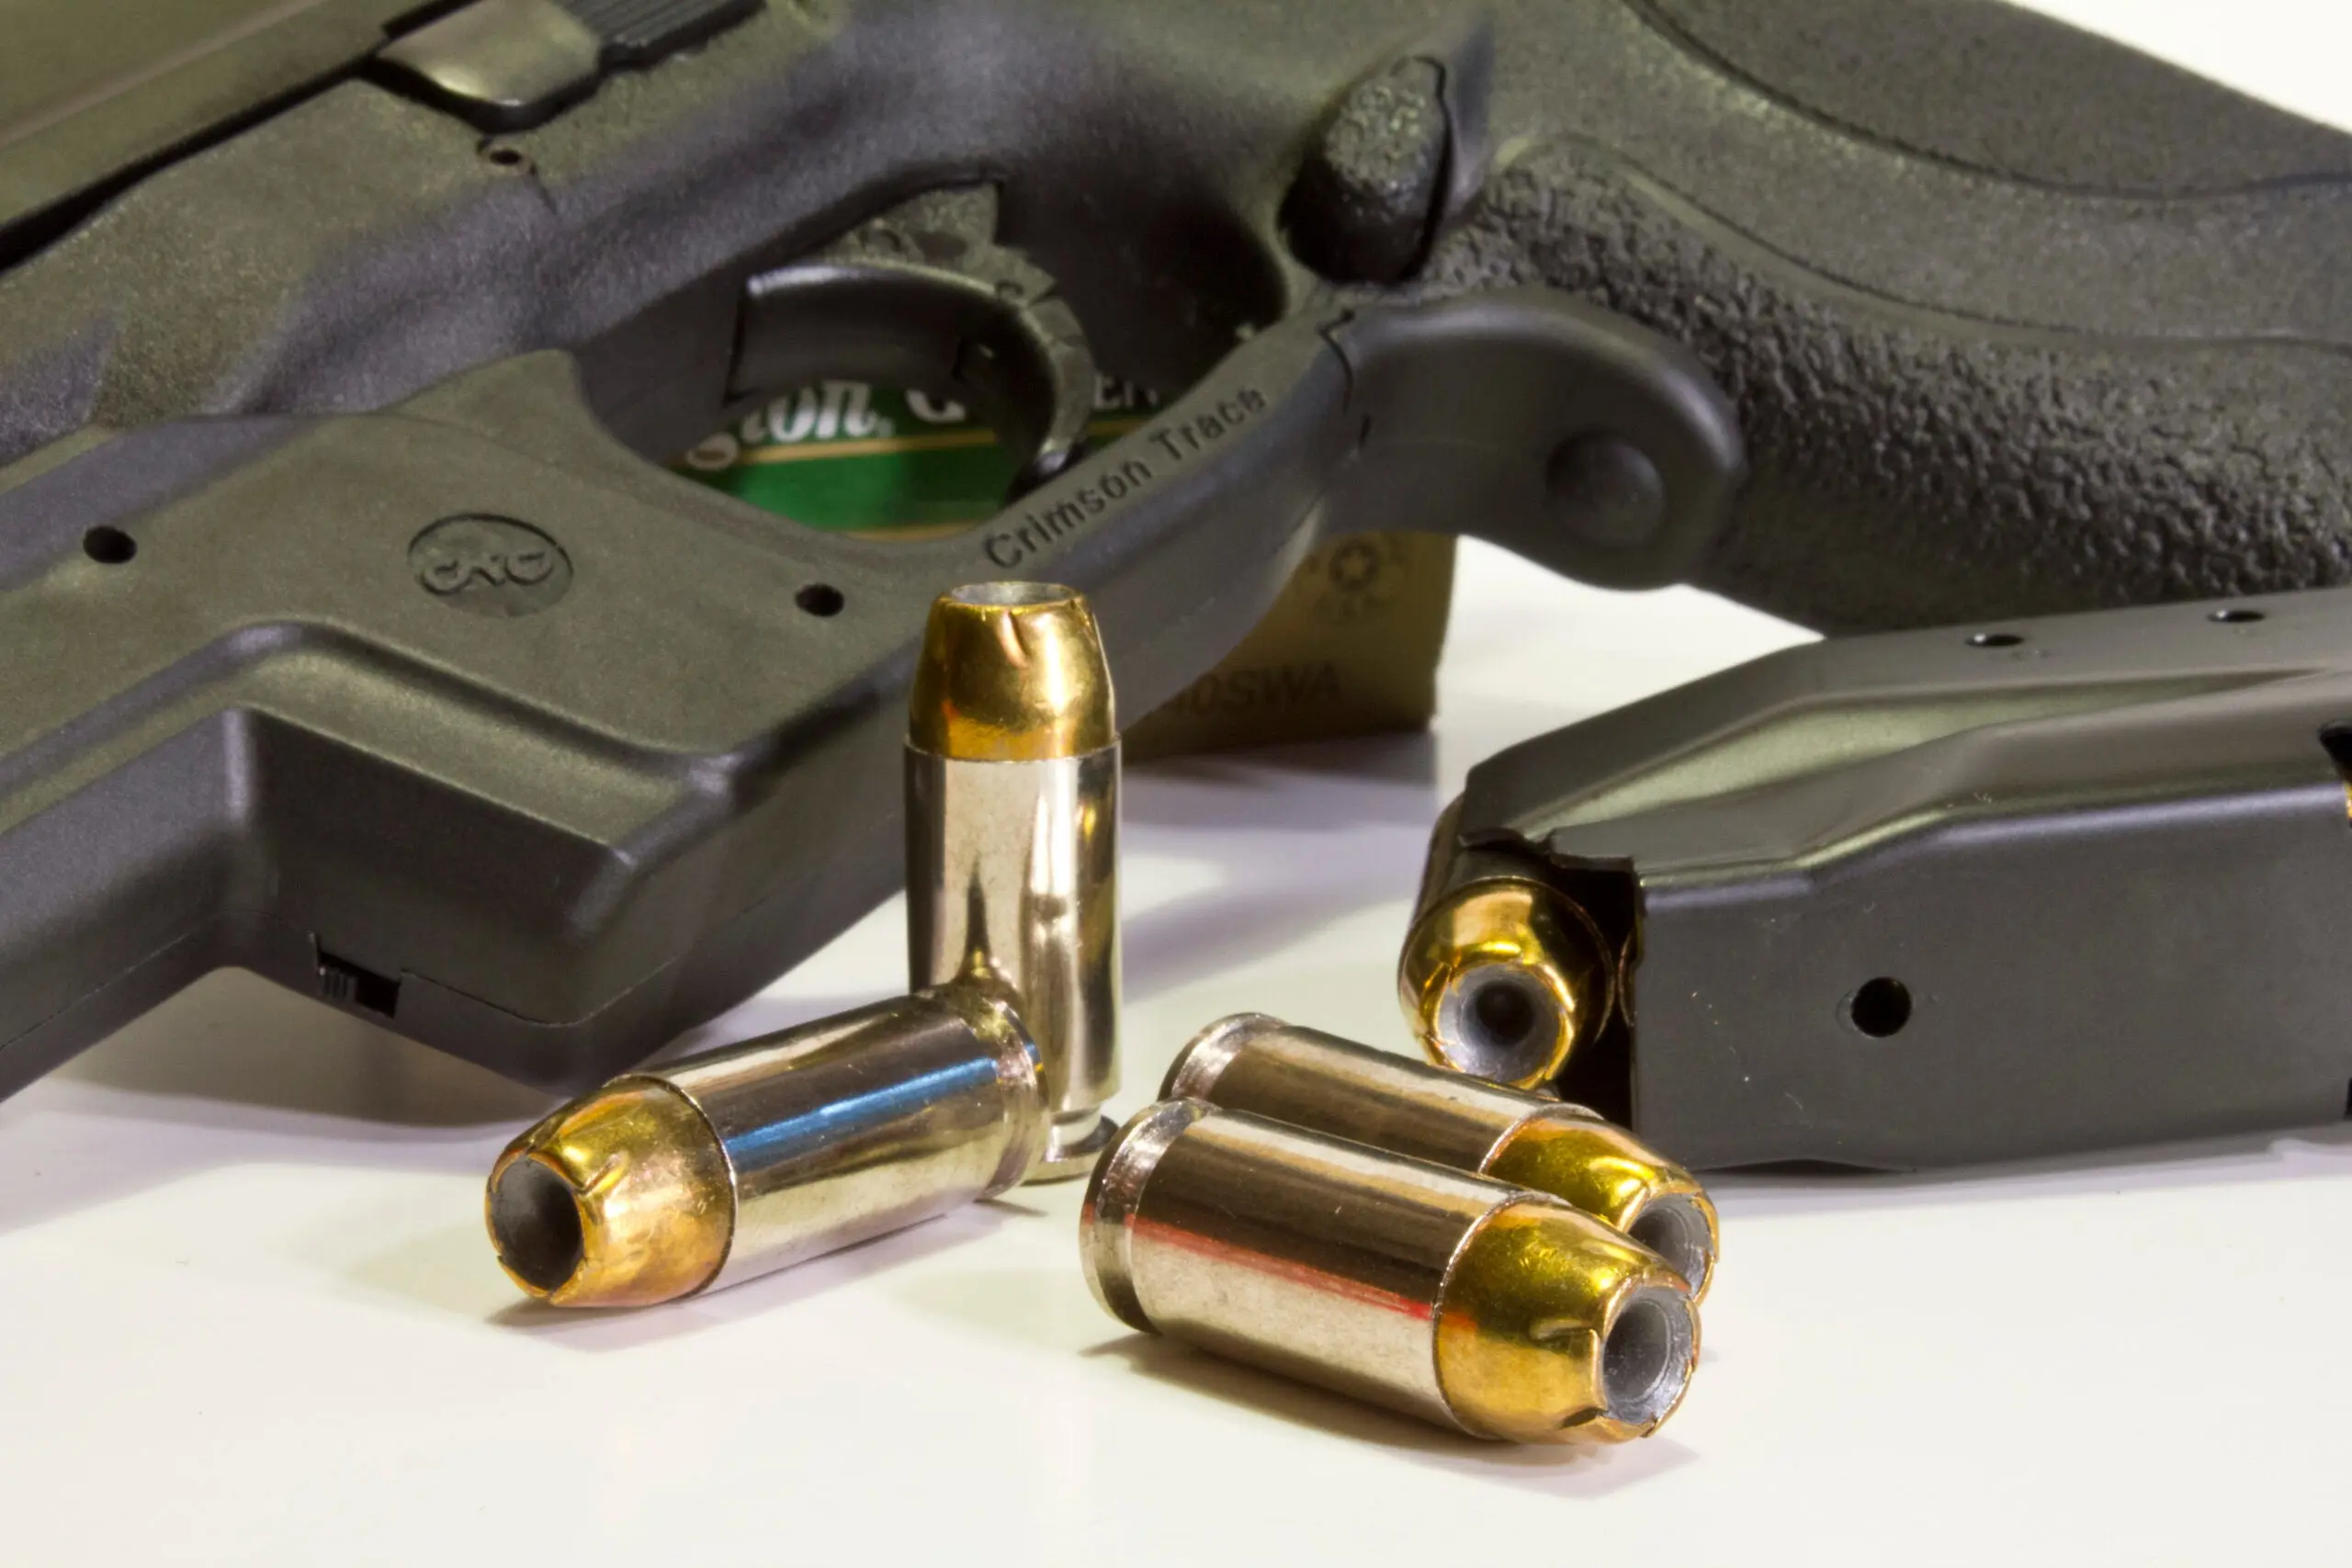 40 S&amp;W cartridge lying near a pistol and magazine on white background